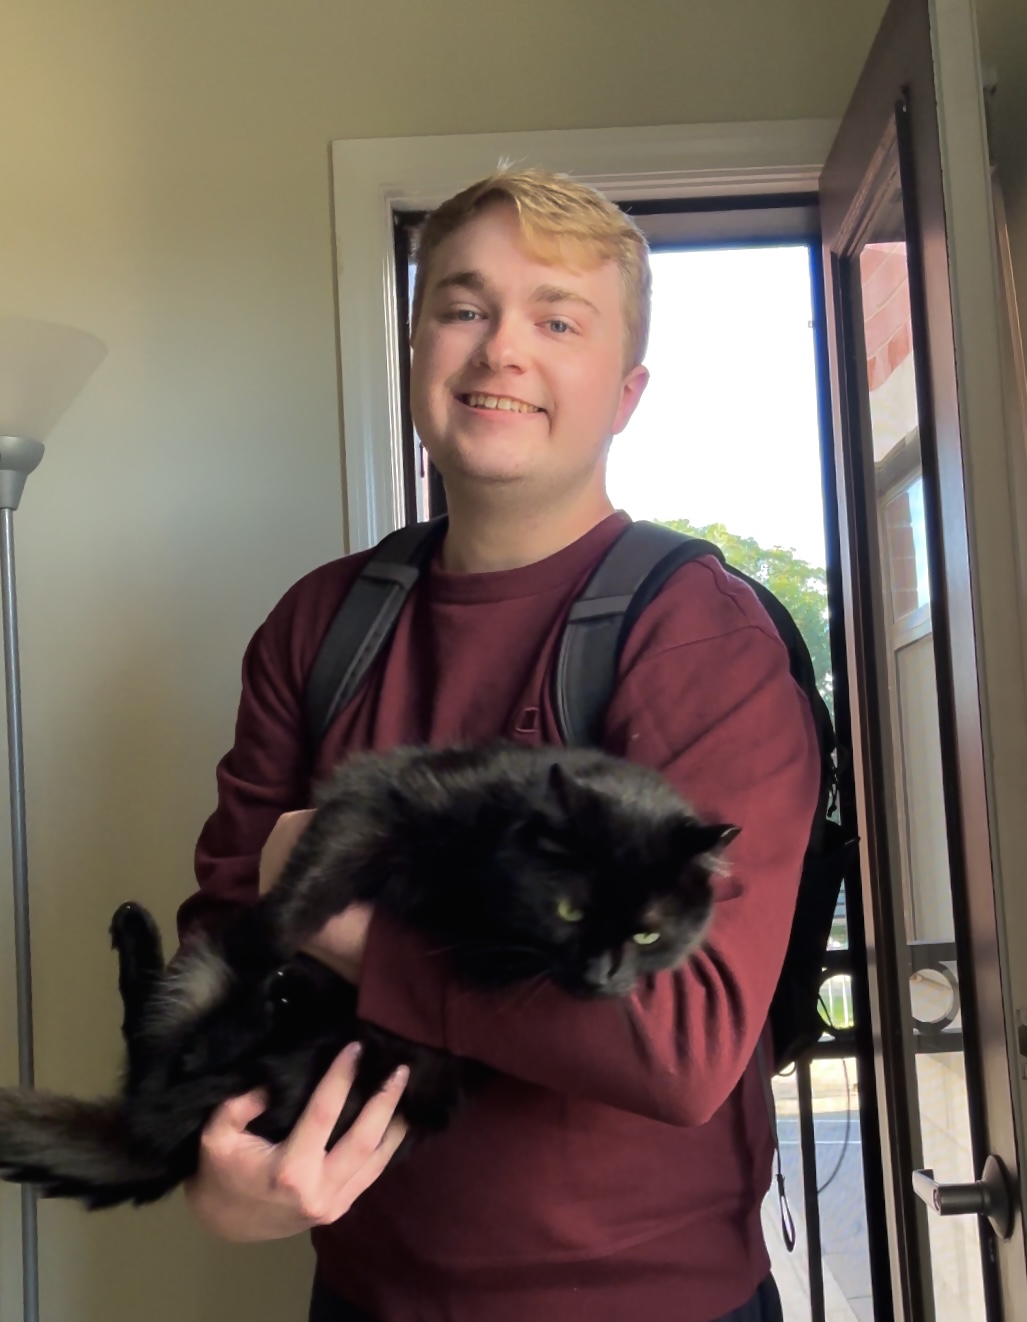 Noah Scudder stands in a doorway holding a cat